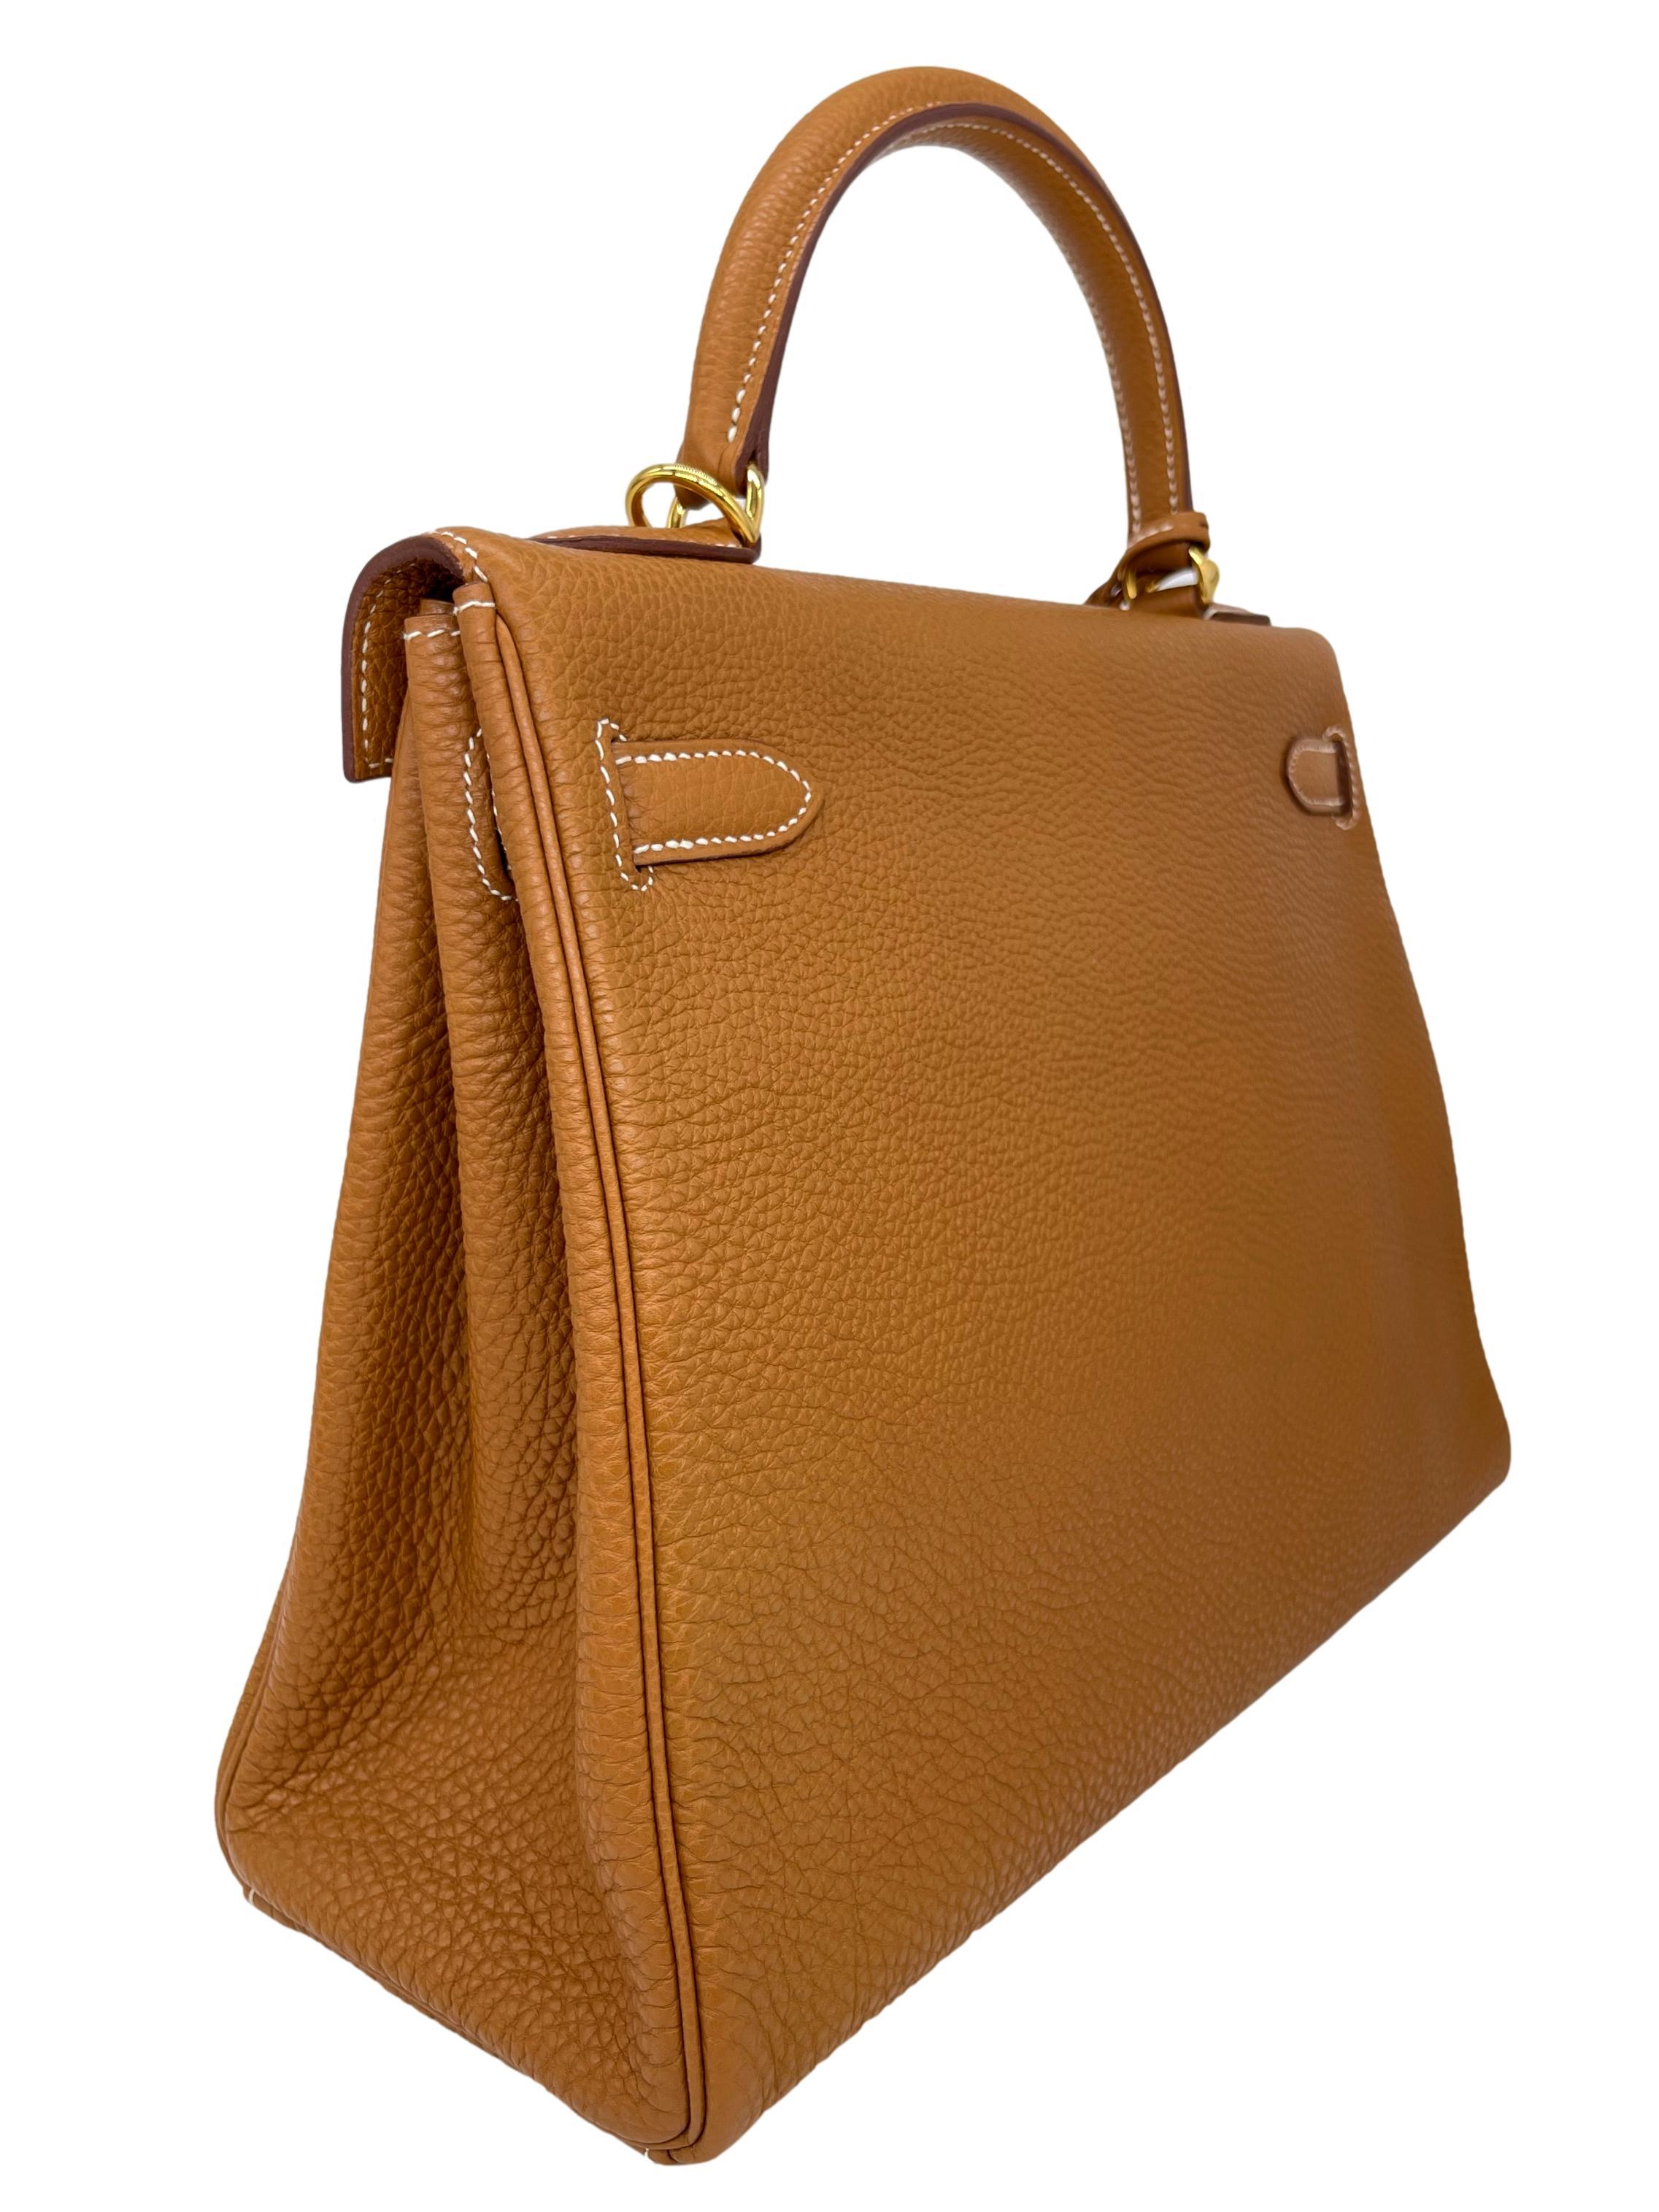 Hermès Natural Clemence Retourne Kelly Handbag with Gold Hardware 32cm, 2007. 3